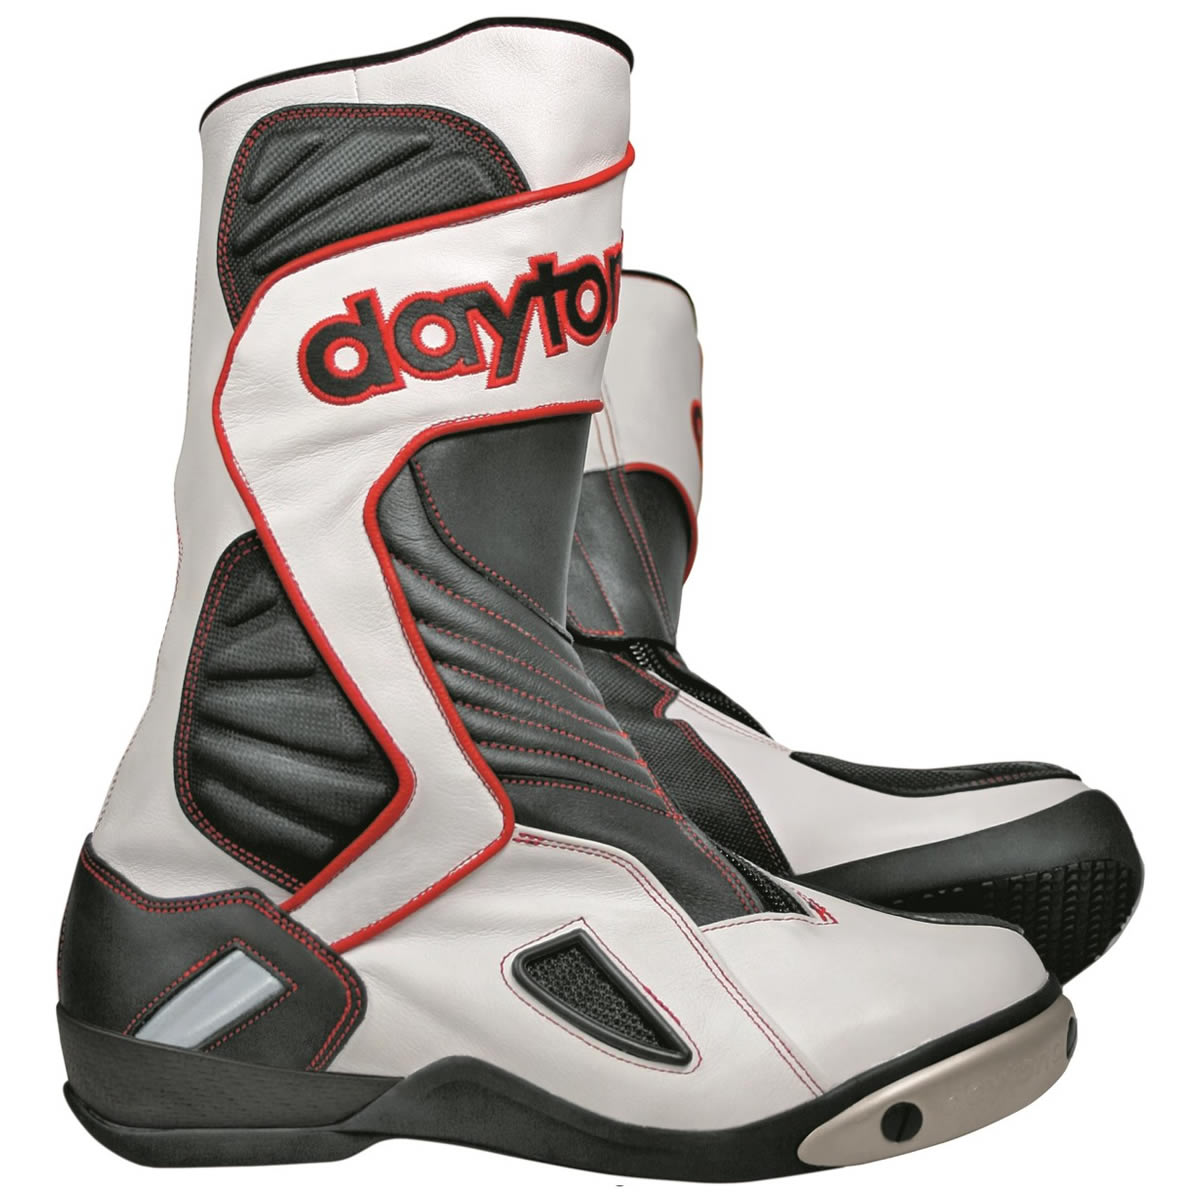 Daytona Evo Voltex GTX Stiefel, weiß-schwarz-rot